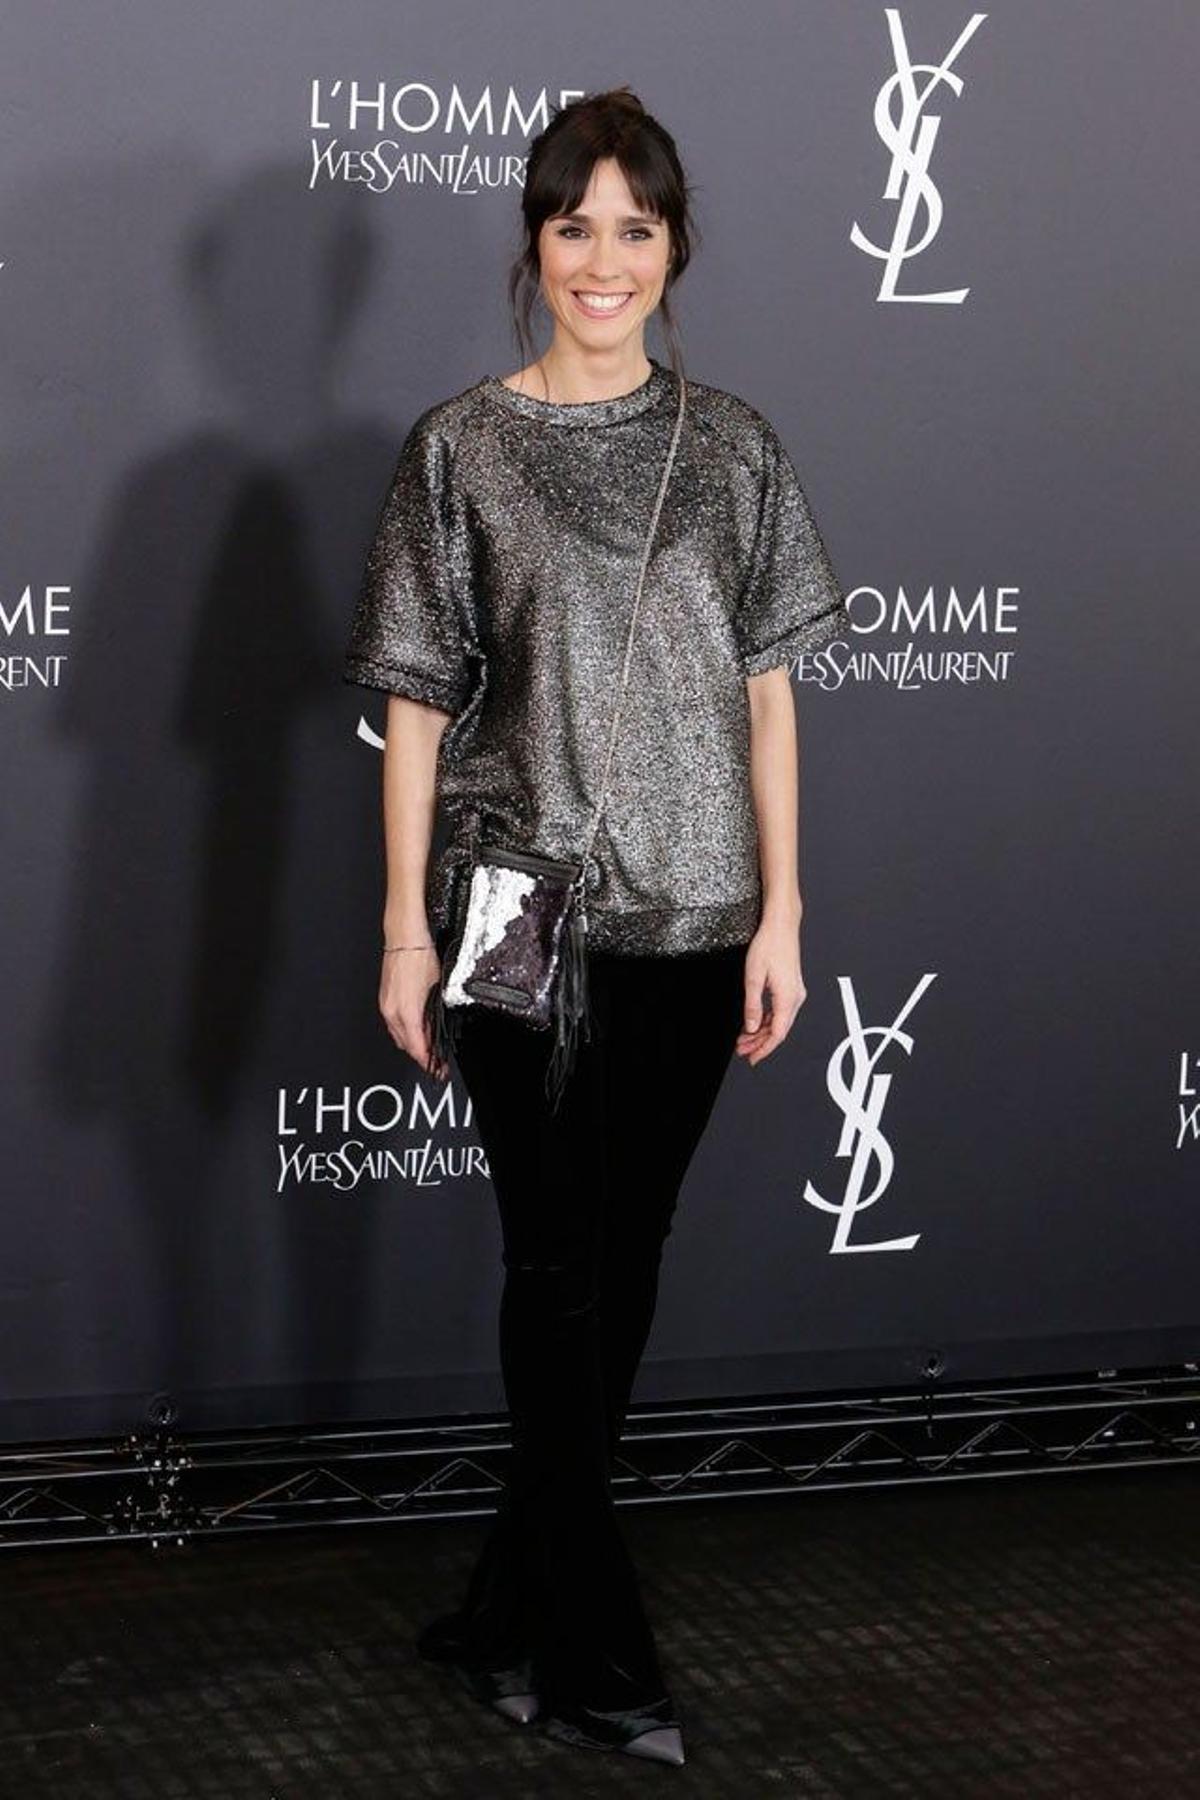 Alba Lago, en la fiesta de aniversario L'Homme de Yves Saint Laurent.